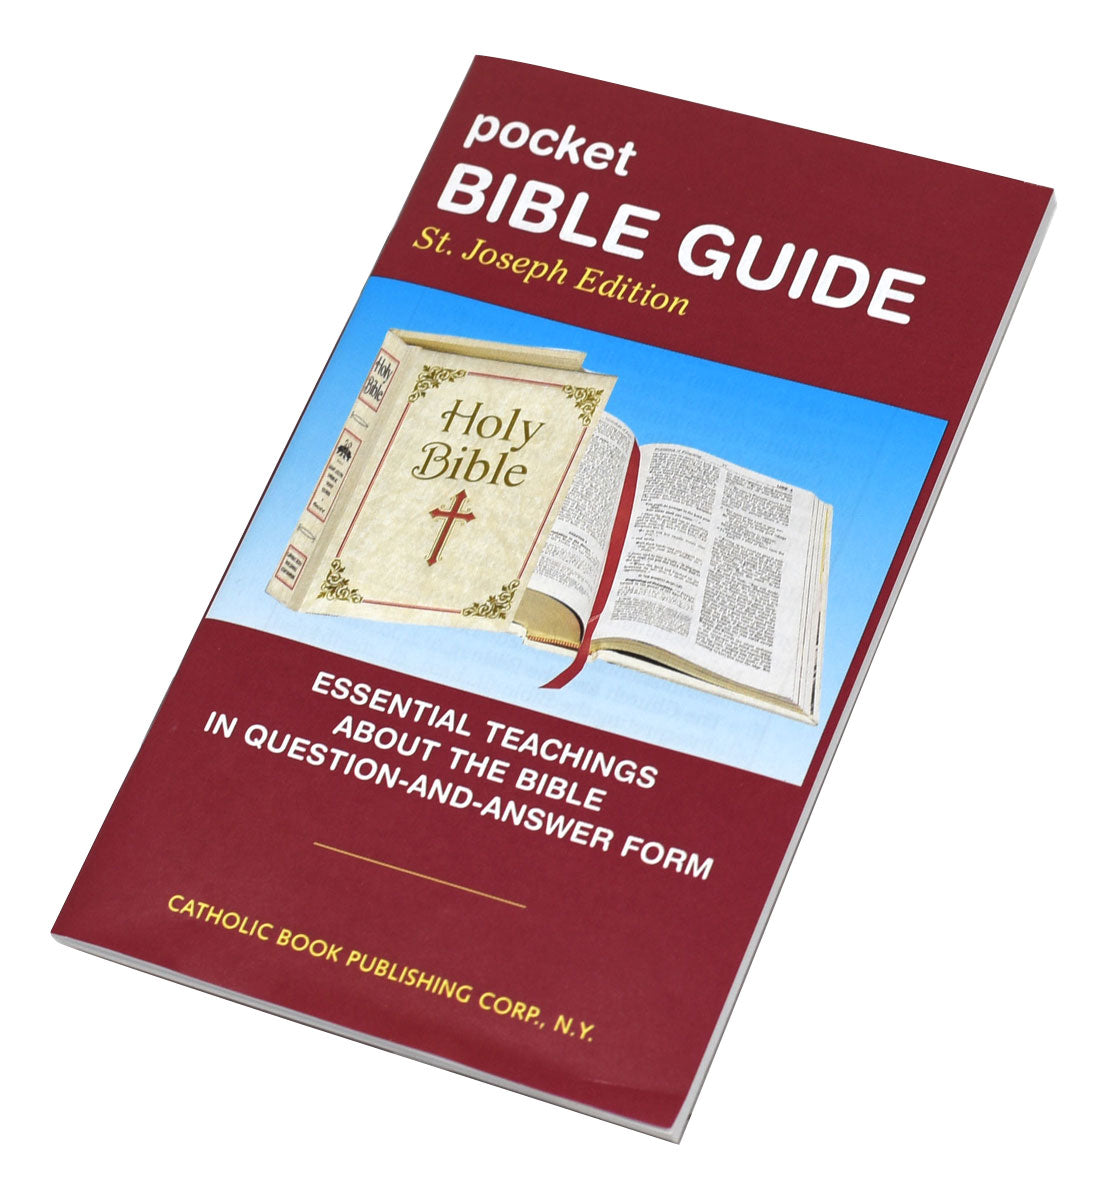 Pocket Bible Guide